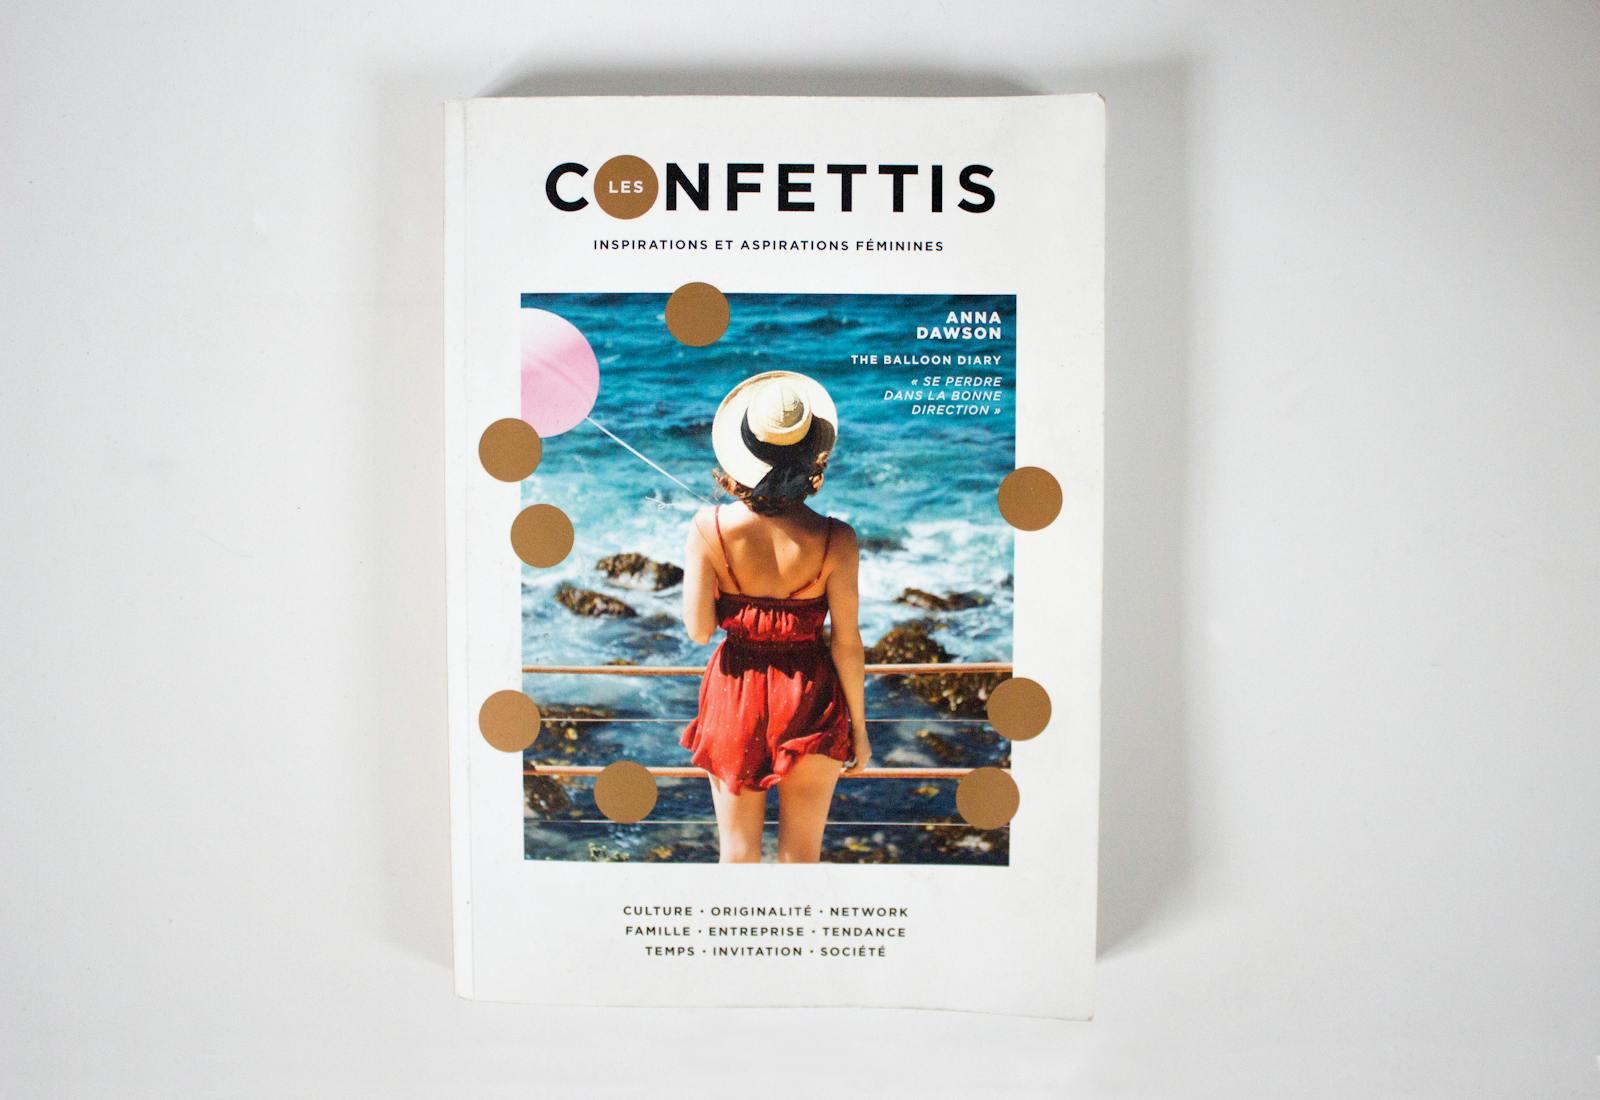 cover of the magazine "Les Confettis"